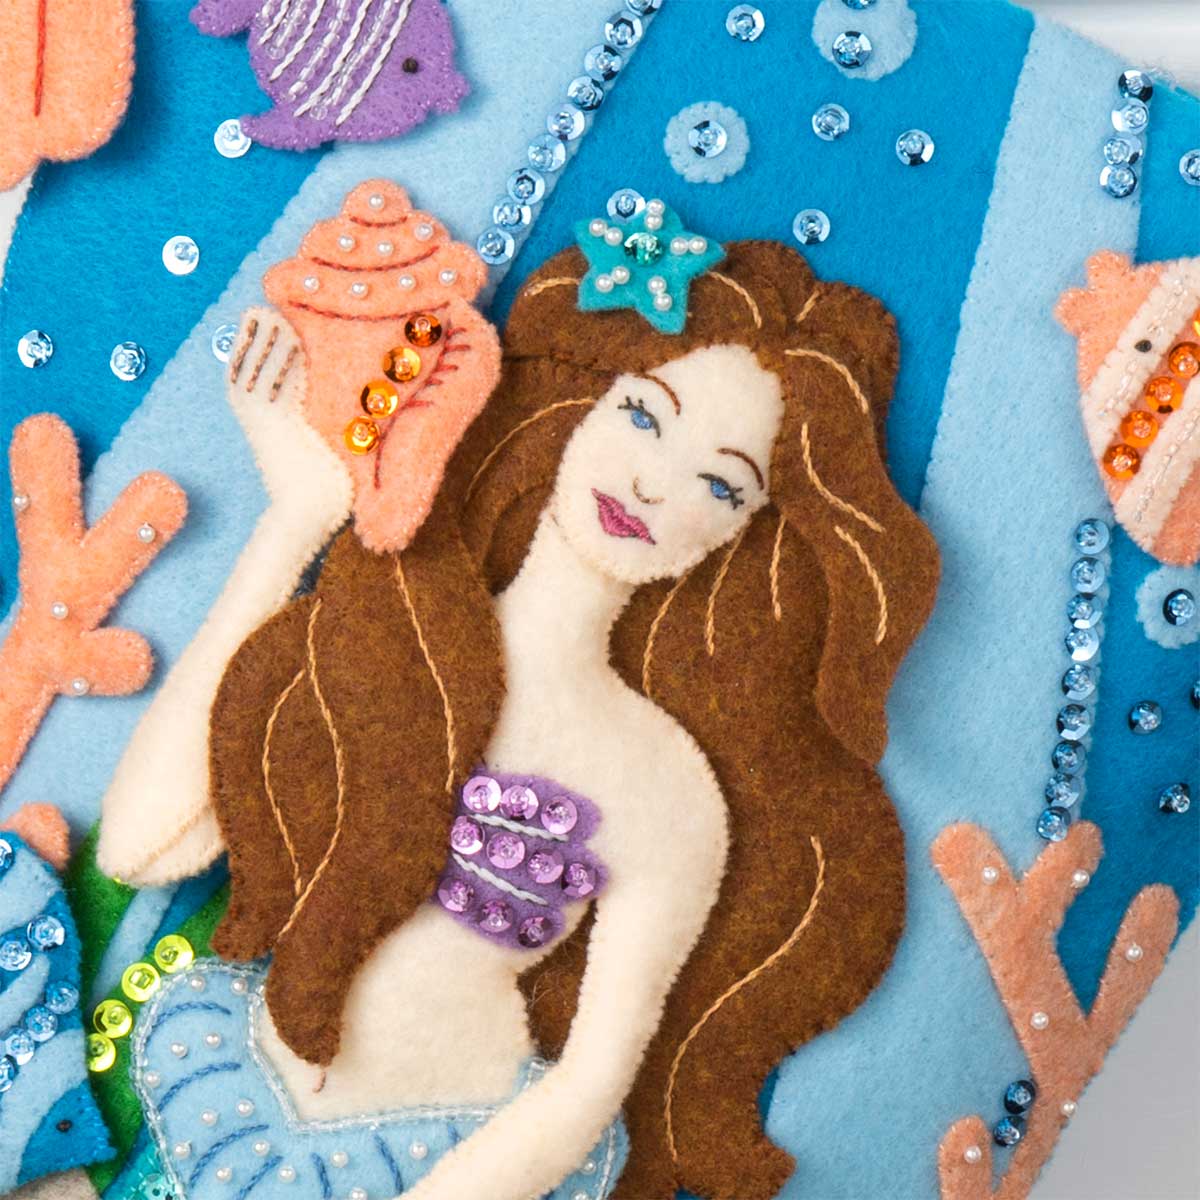 Bucilla ® Seasonal - Felt - Stocking Kits - Sea Princess - 89072E